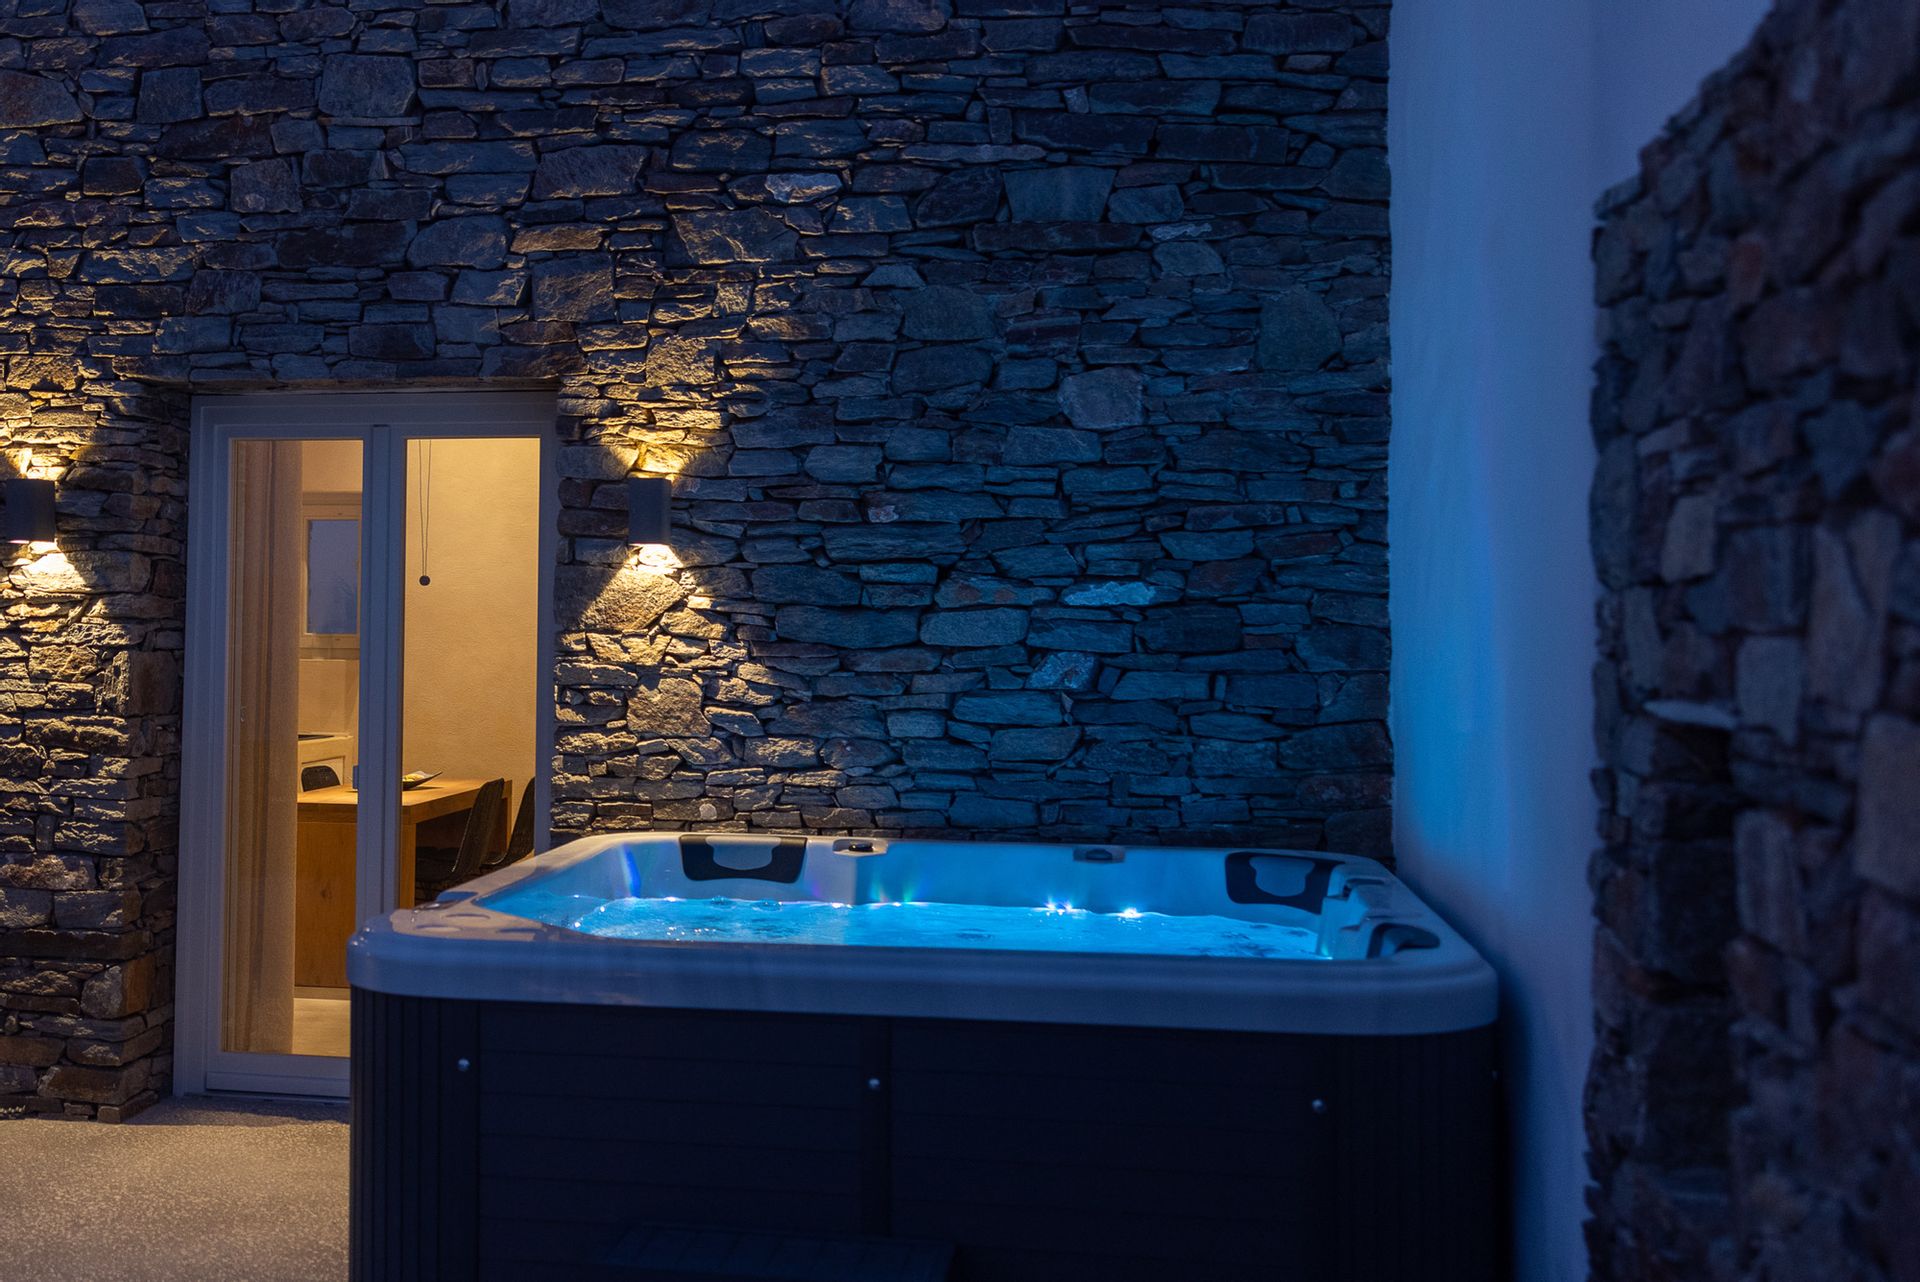 Ventus di Milo, Milos - One Bedroom Exclusive Suite Sea View with Hot Tub